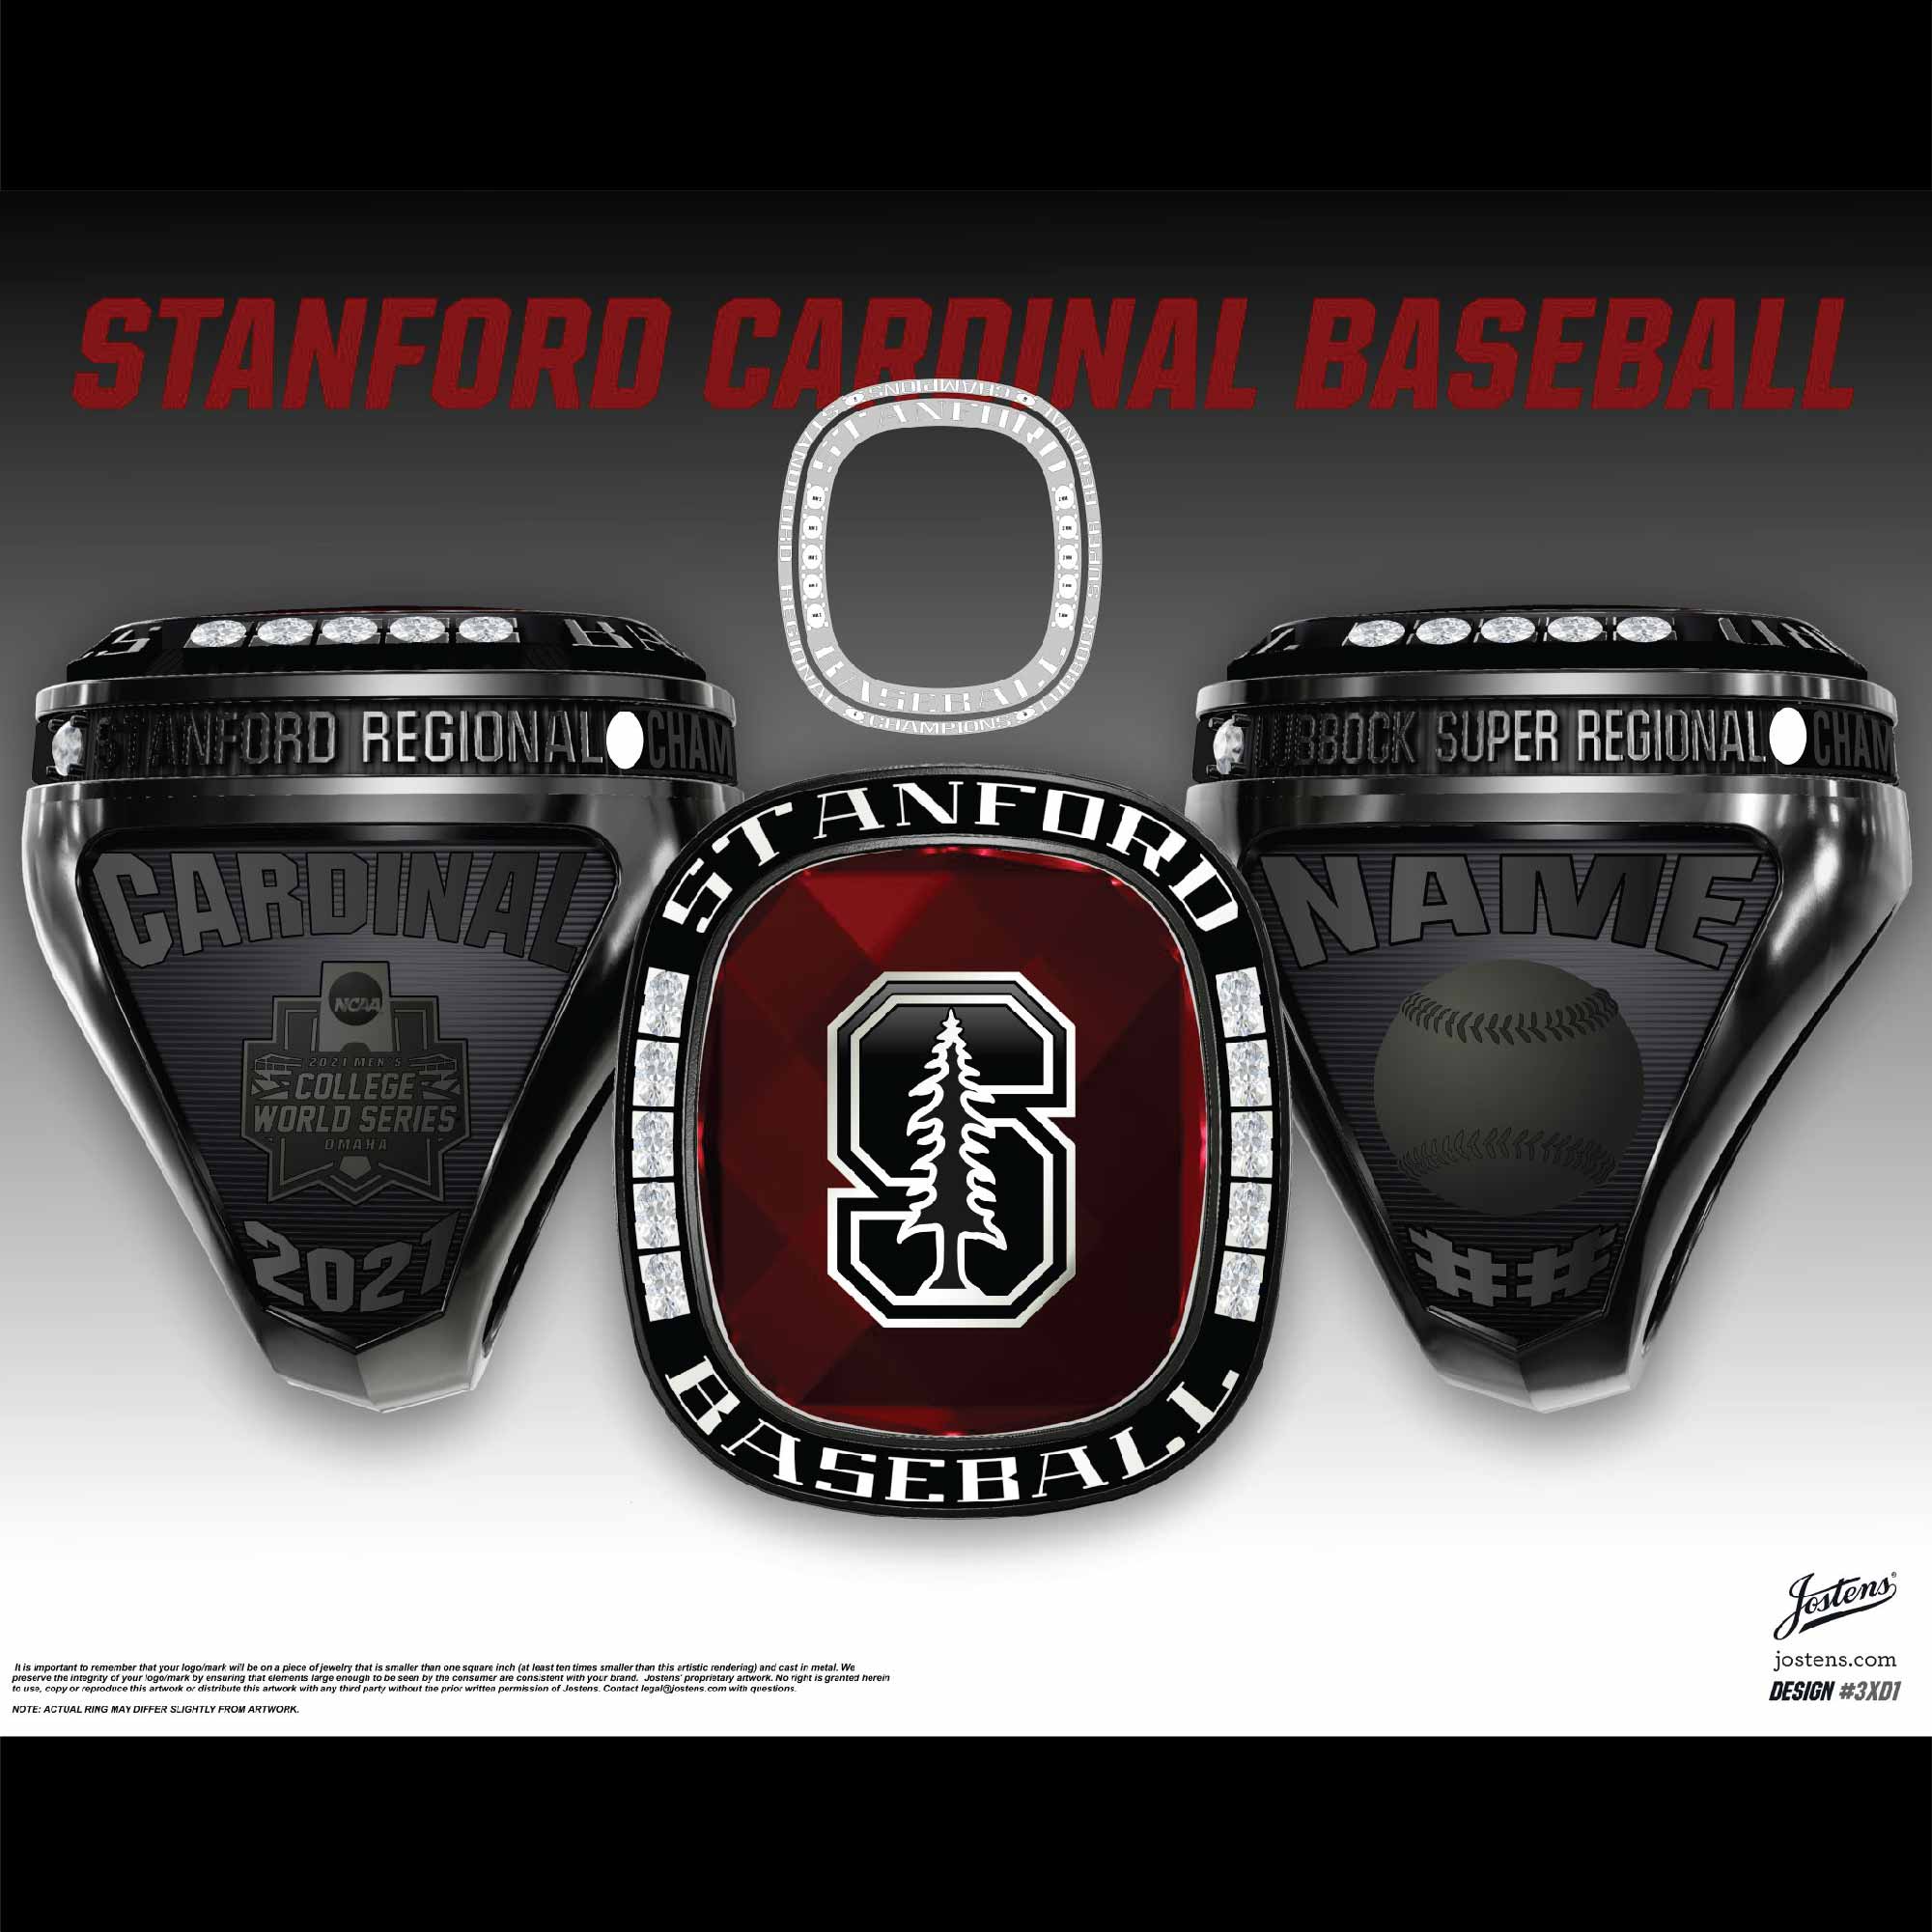 Stanford University Men's Baseball 2021 Regional Championship Ring